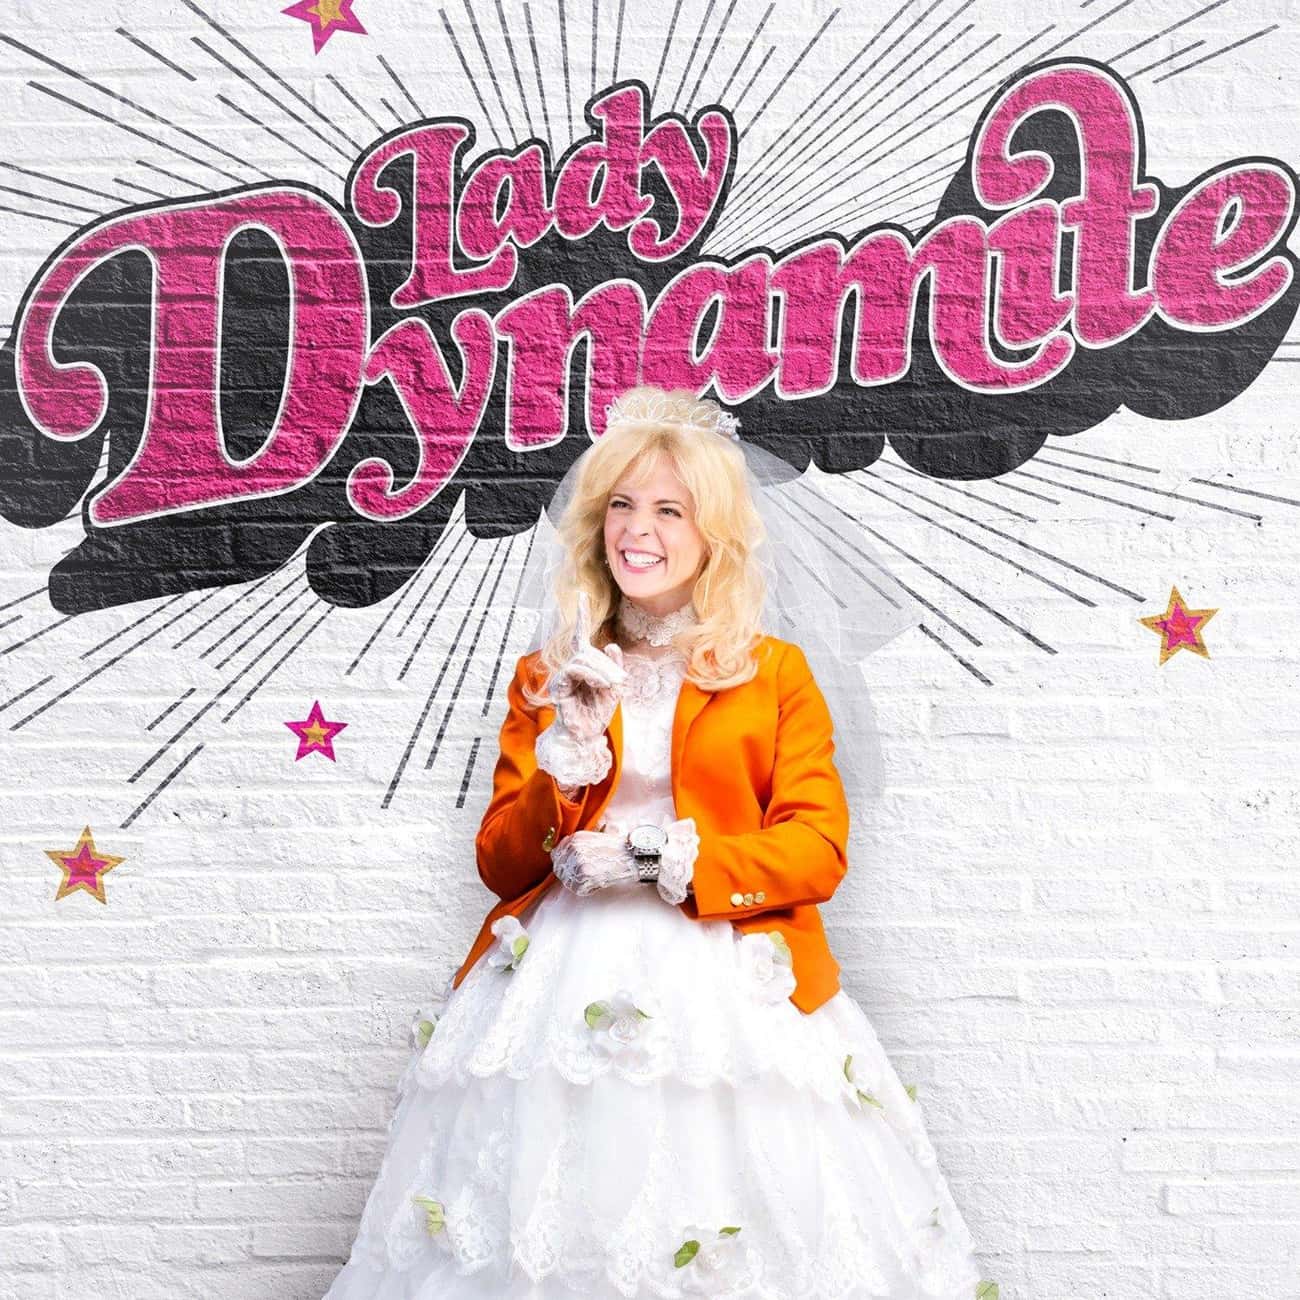 Lady Dynamite